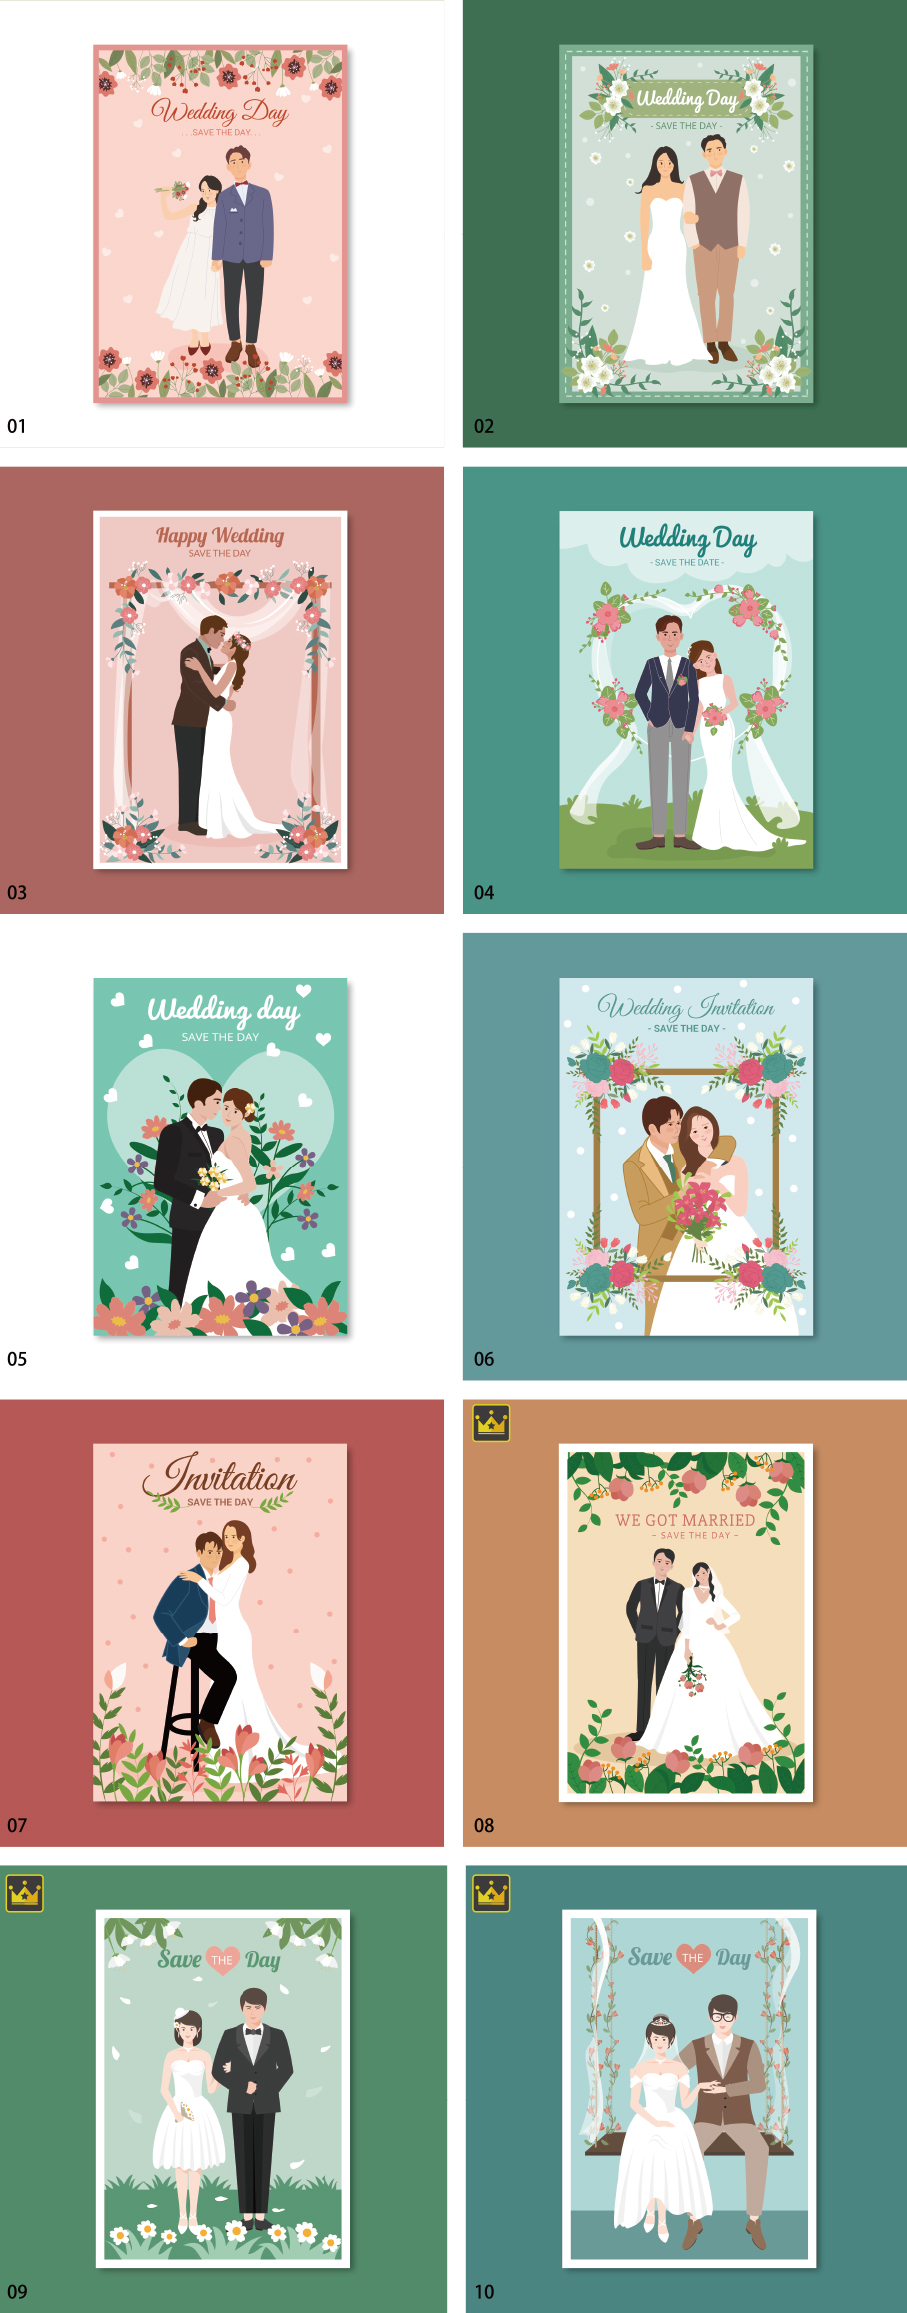 Wedding poster templates